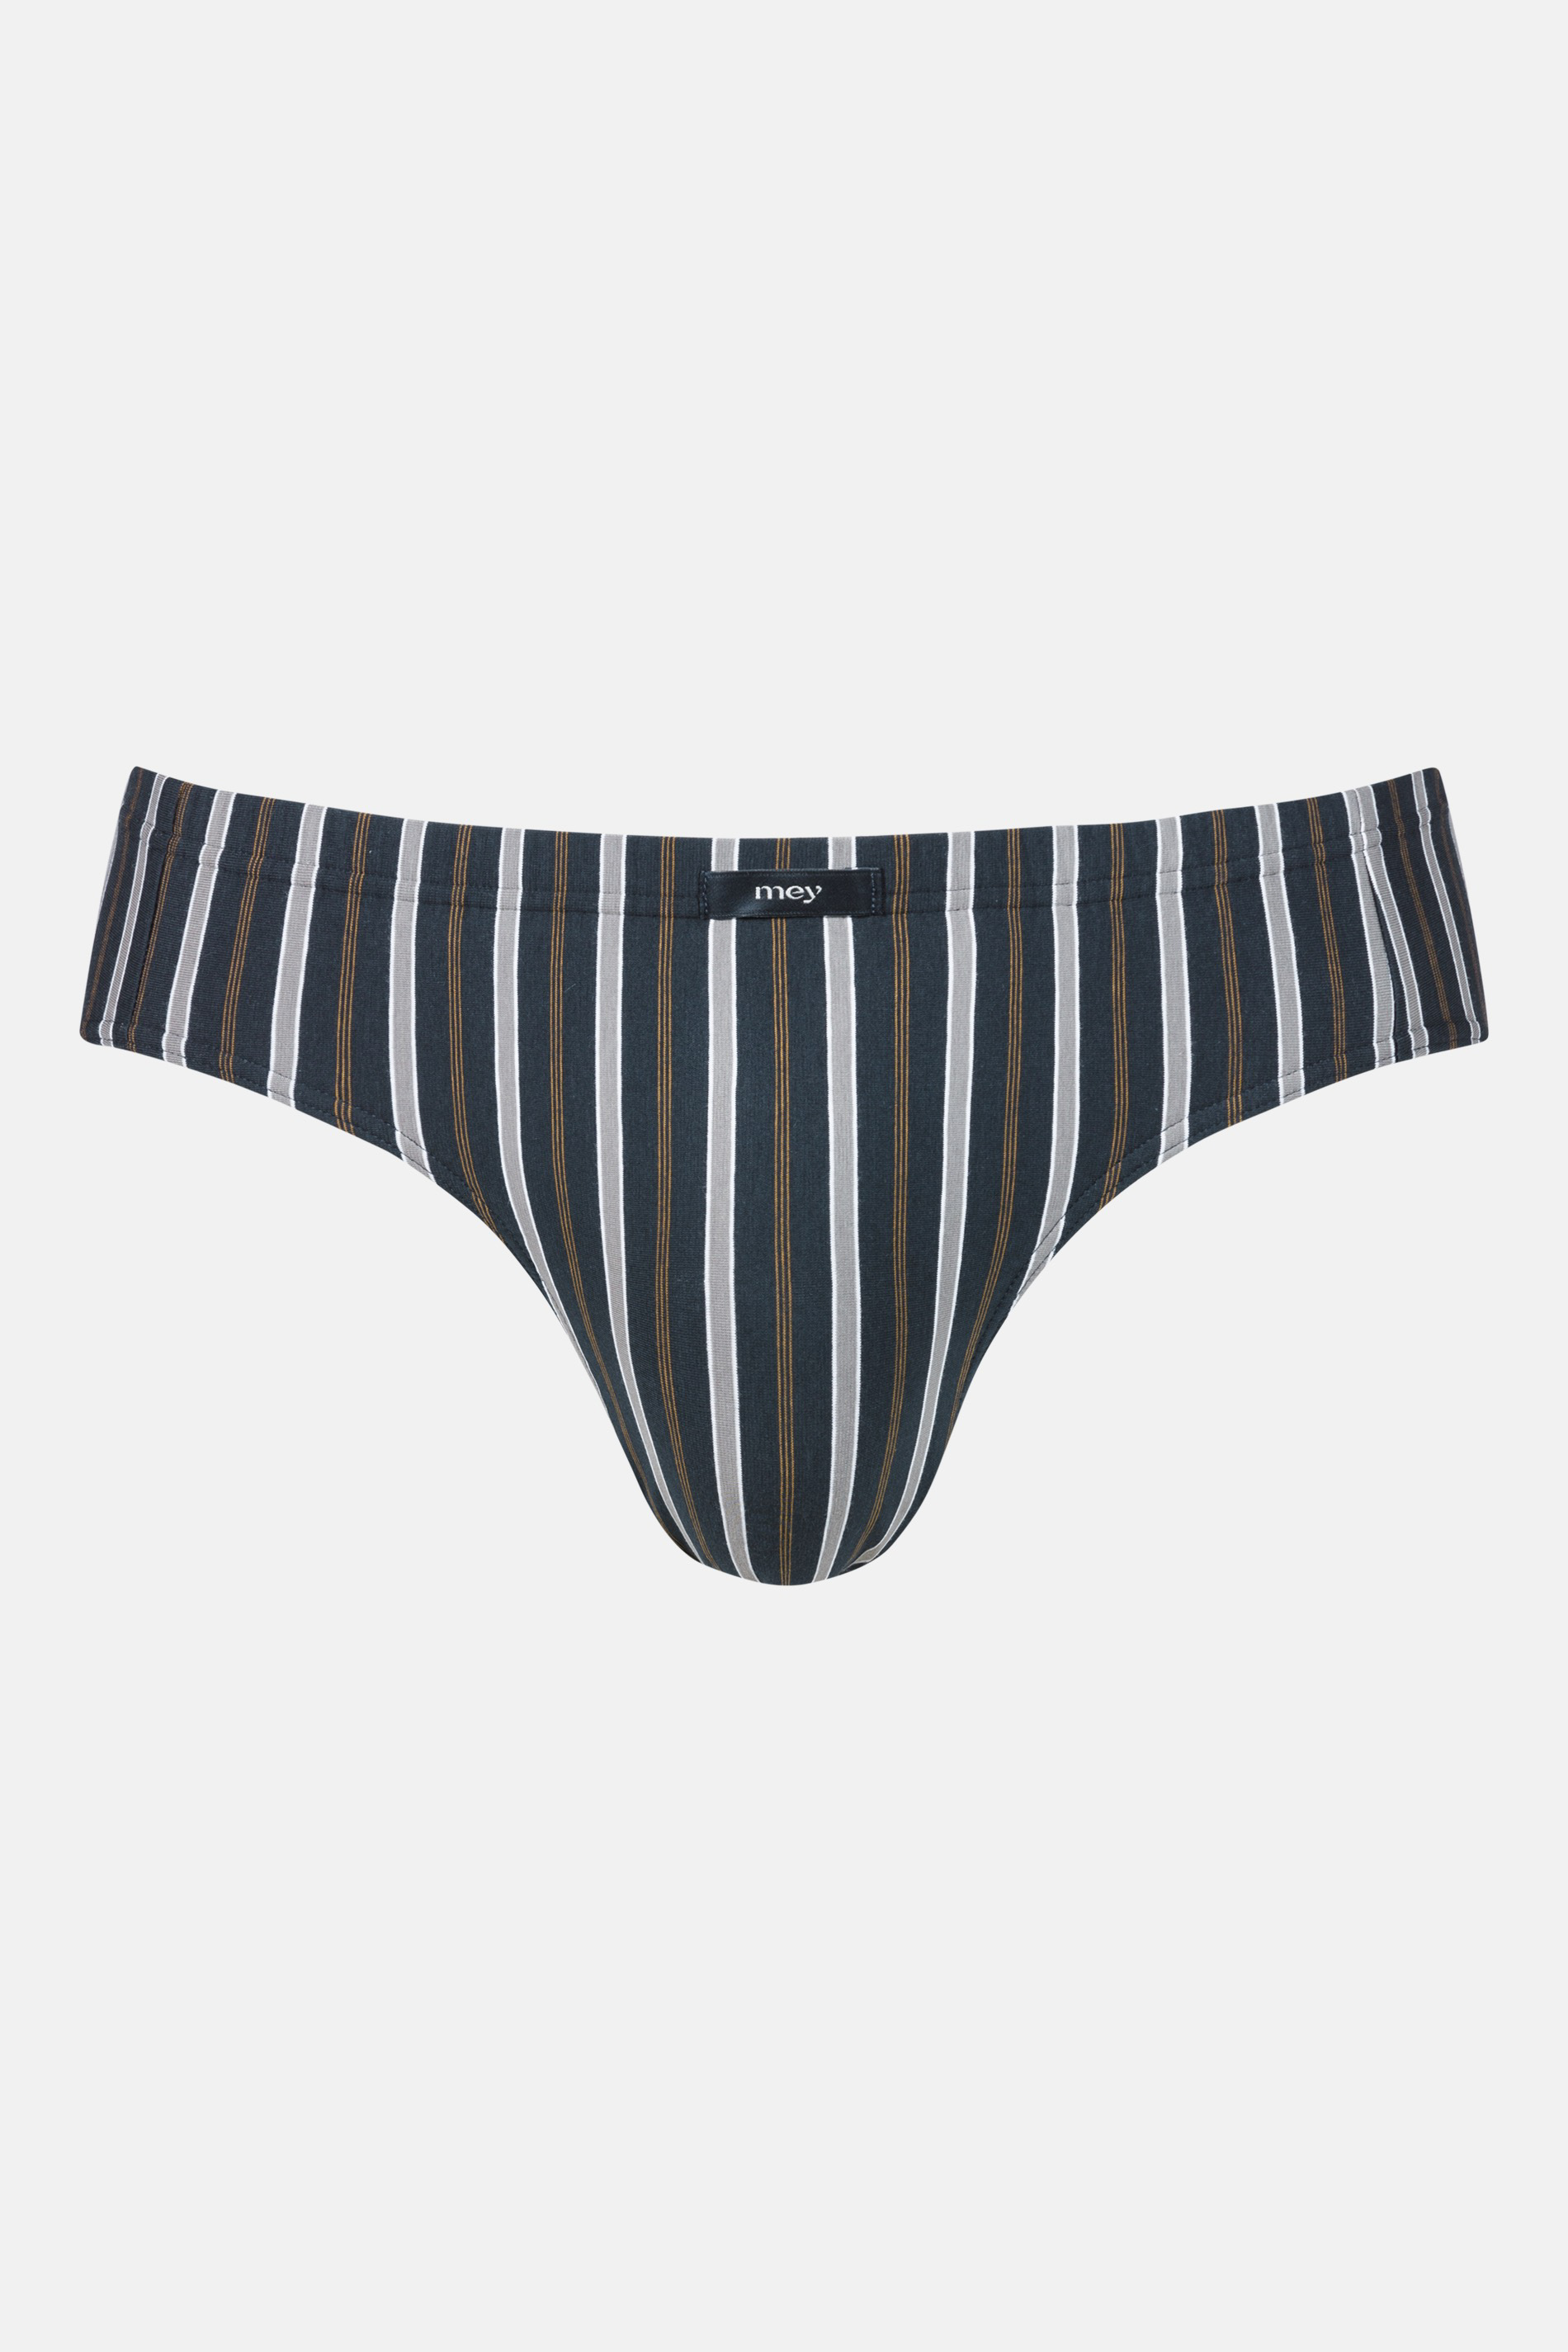 Jazz Pants Serie Striped Freisteller | mey®